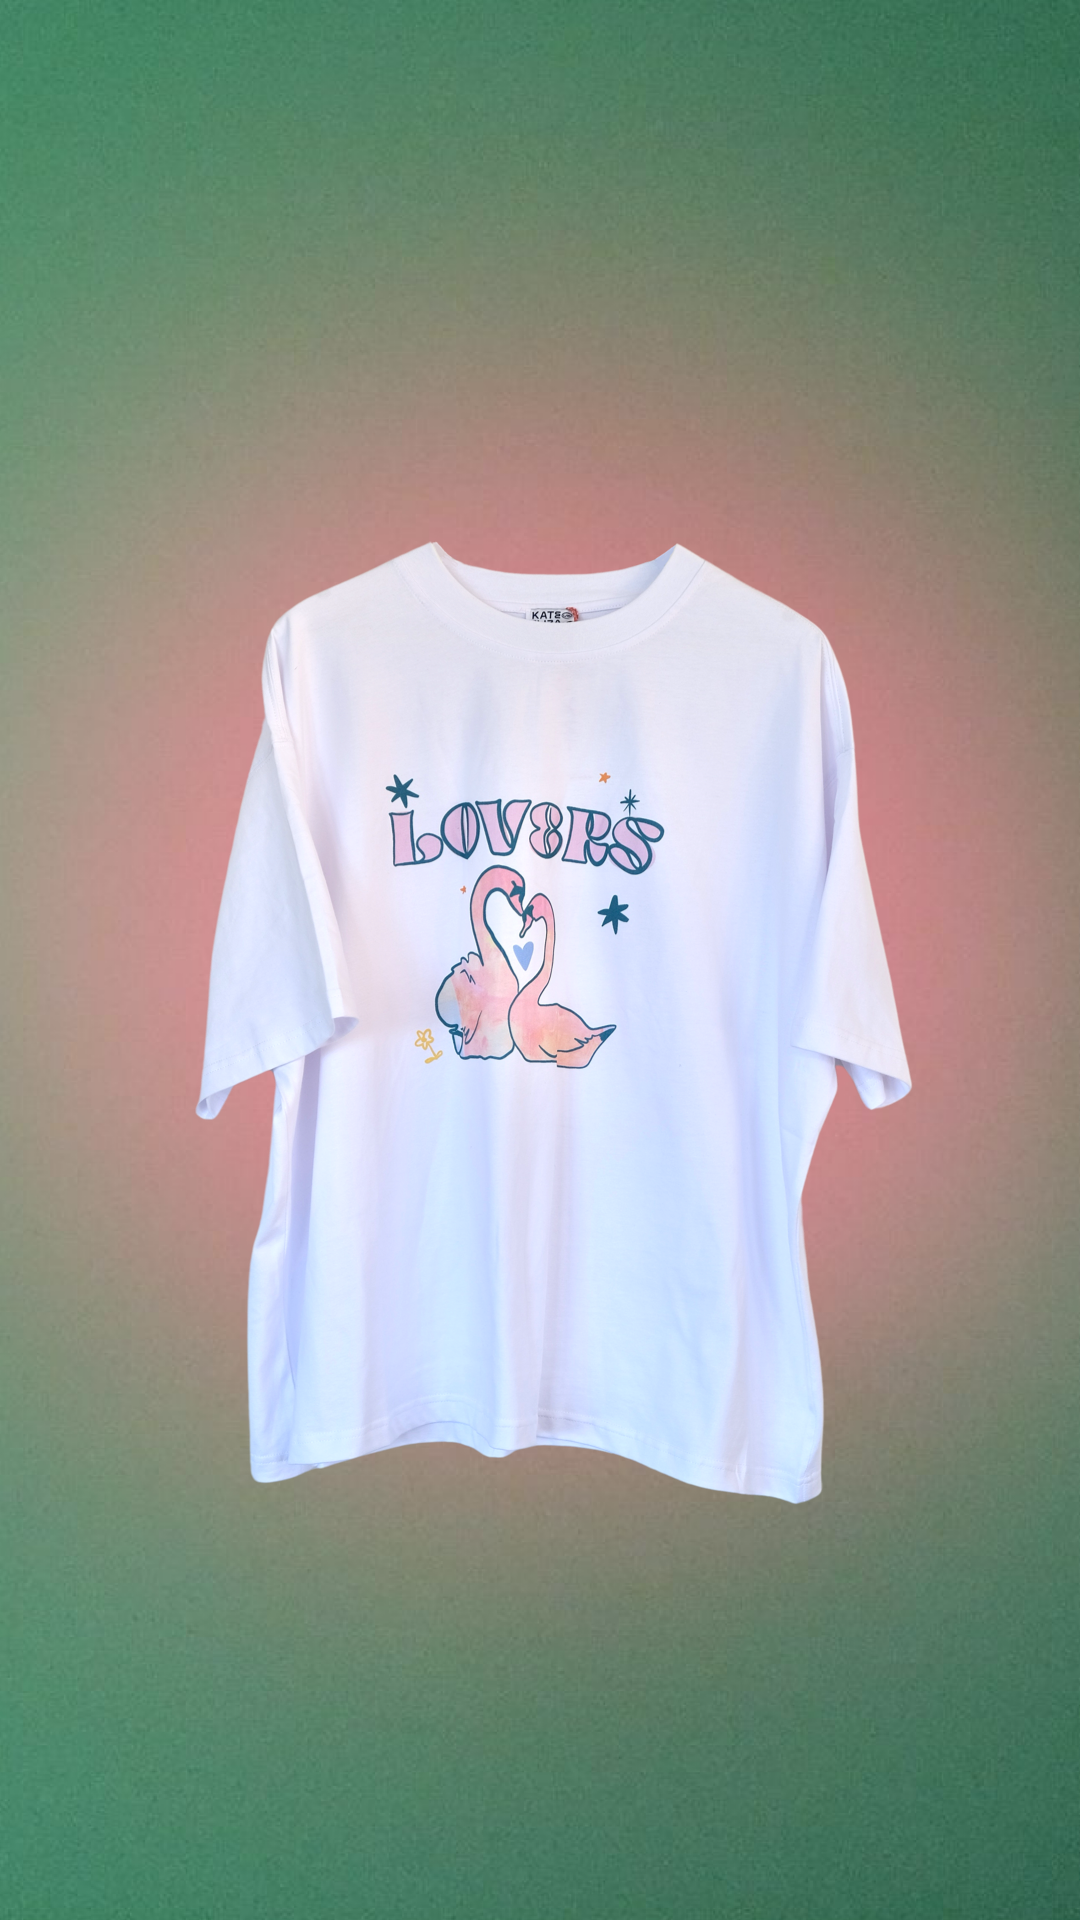 Swans T shirt